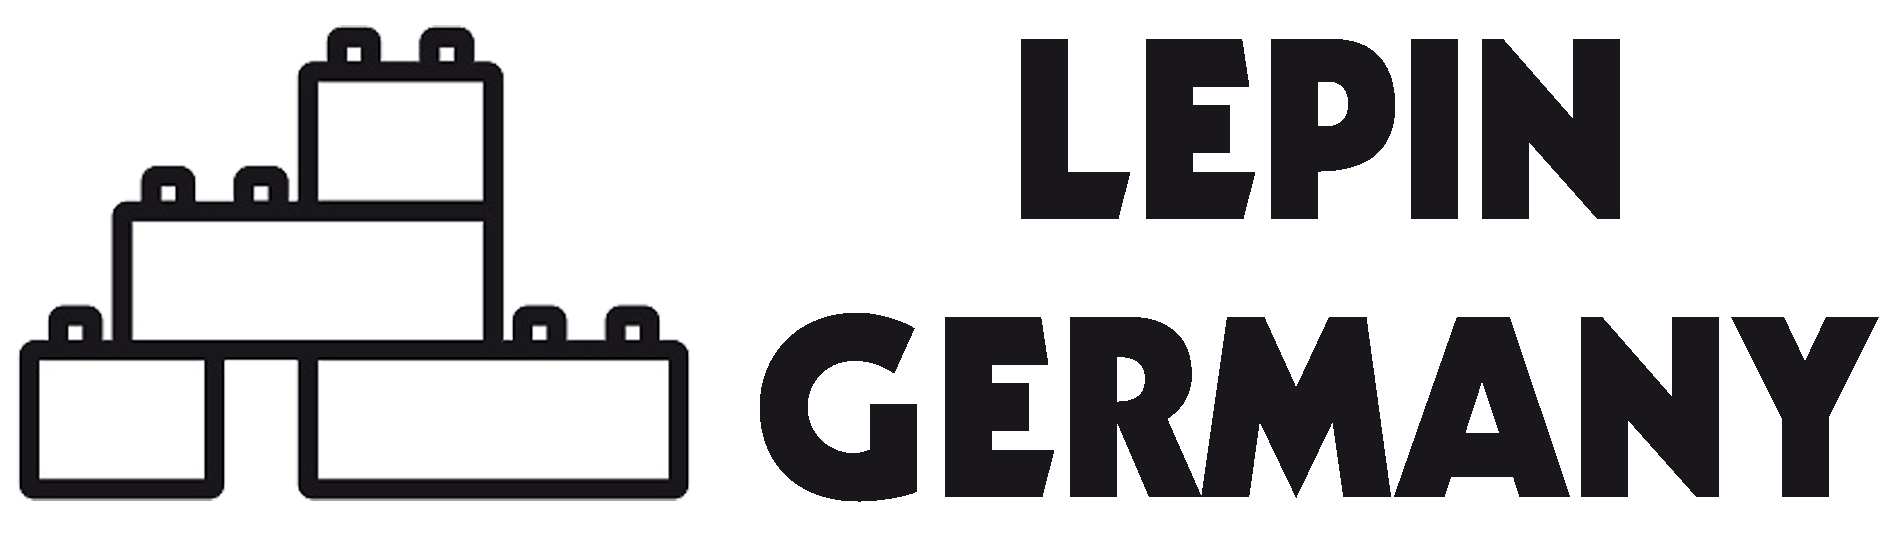 lepin-germany-logo